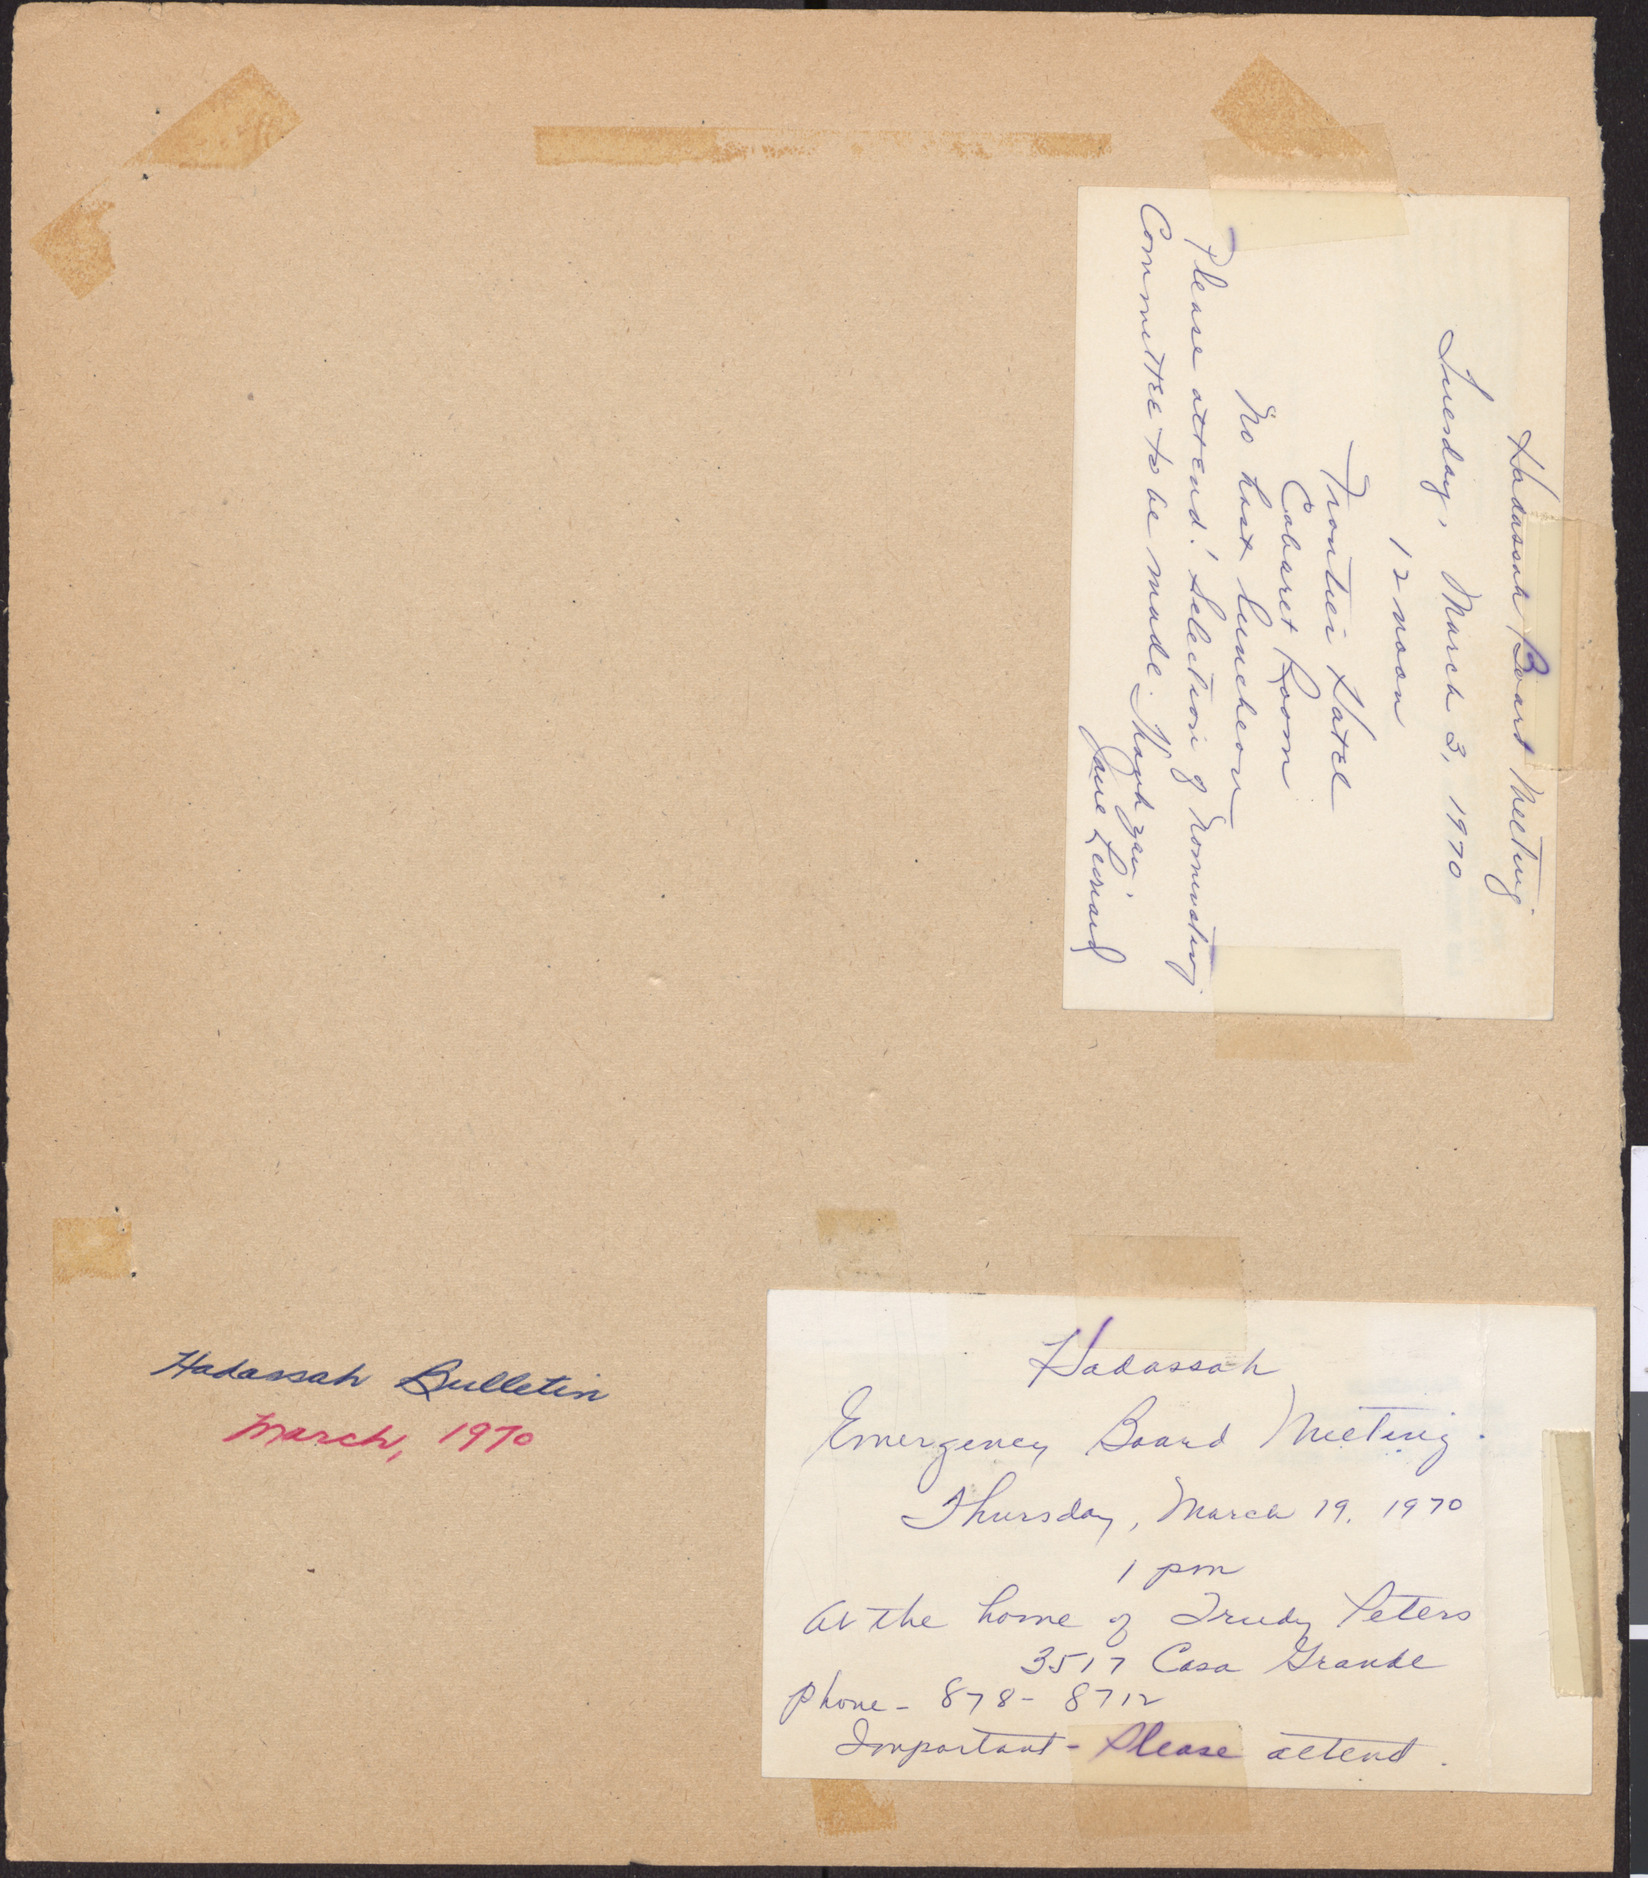 Invitation cards for Hadassah board meeting, March 3, 1970, and Hadassah emergency board meeting, March 19, 1970